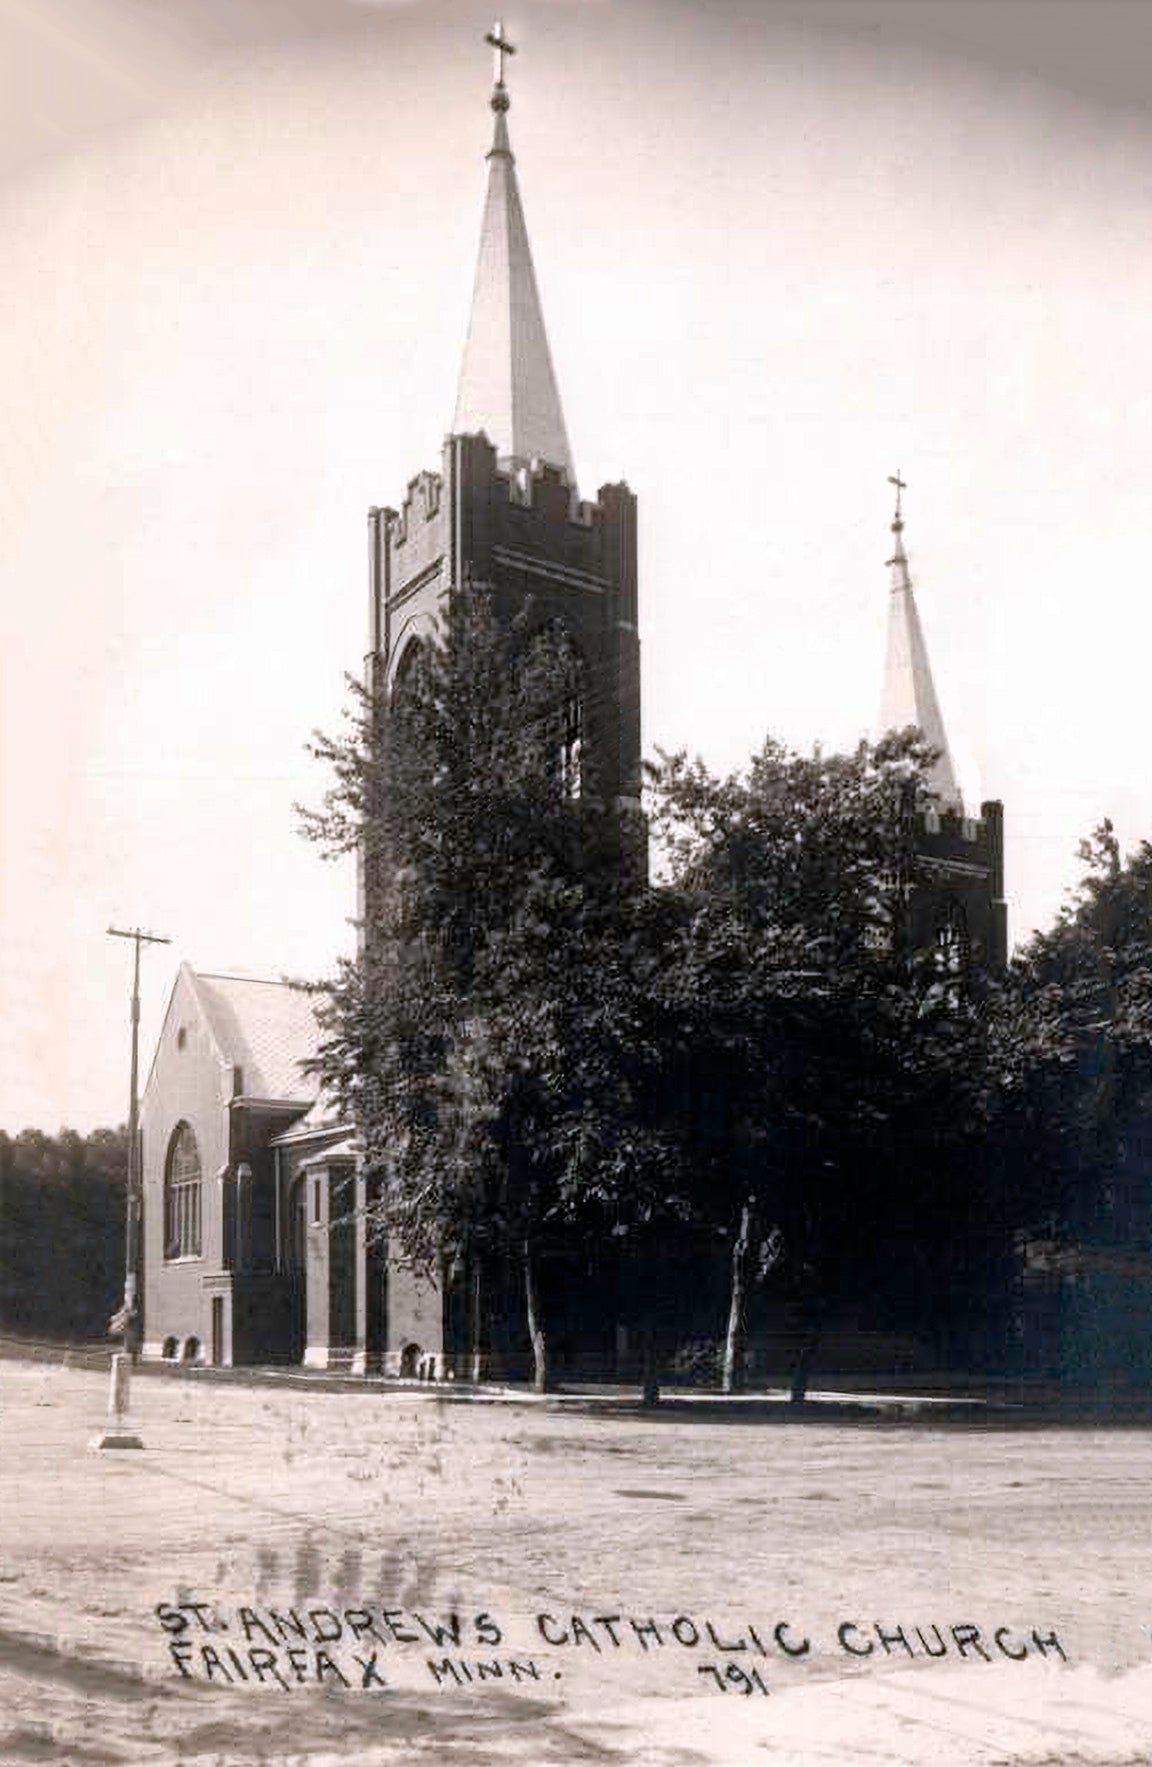 St. Andrews Catholic Church, Fairfax, Minnesota, 1919 Postcard Reproduction